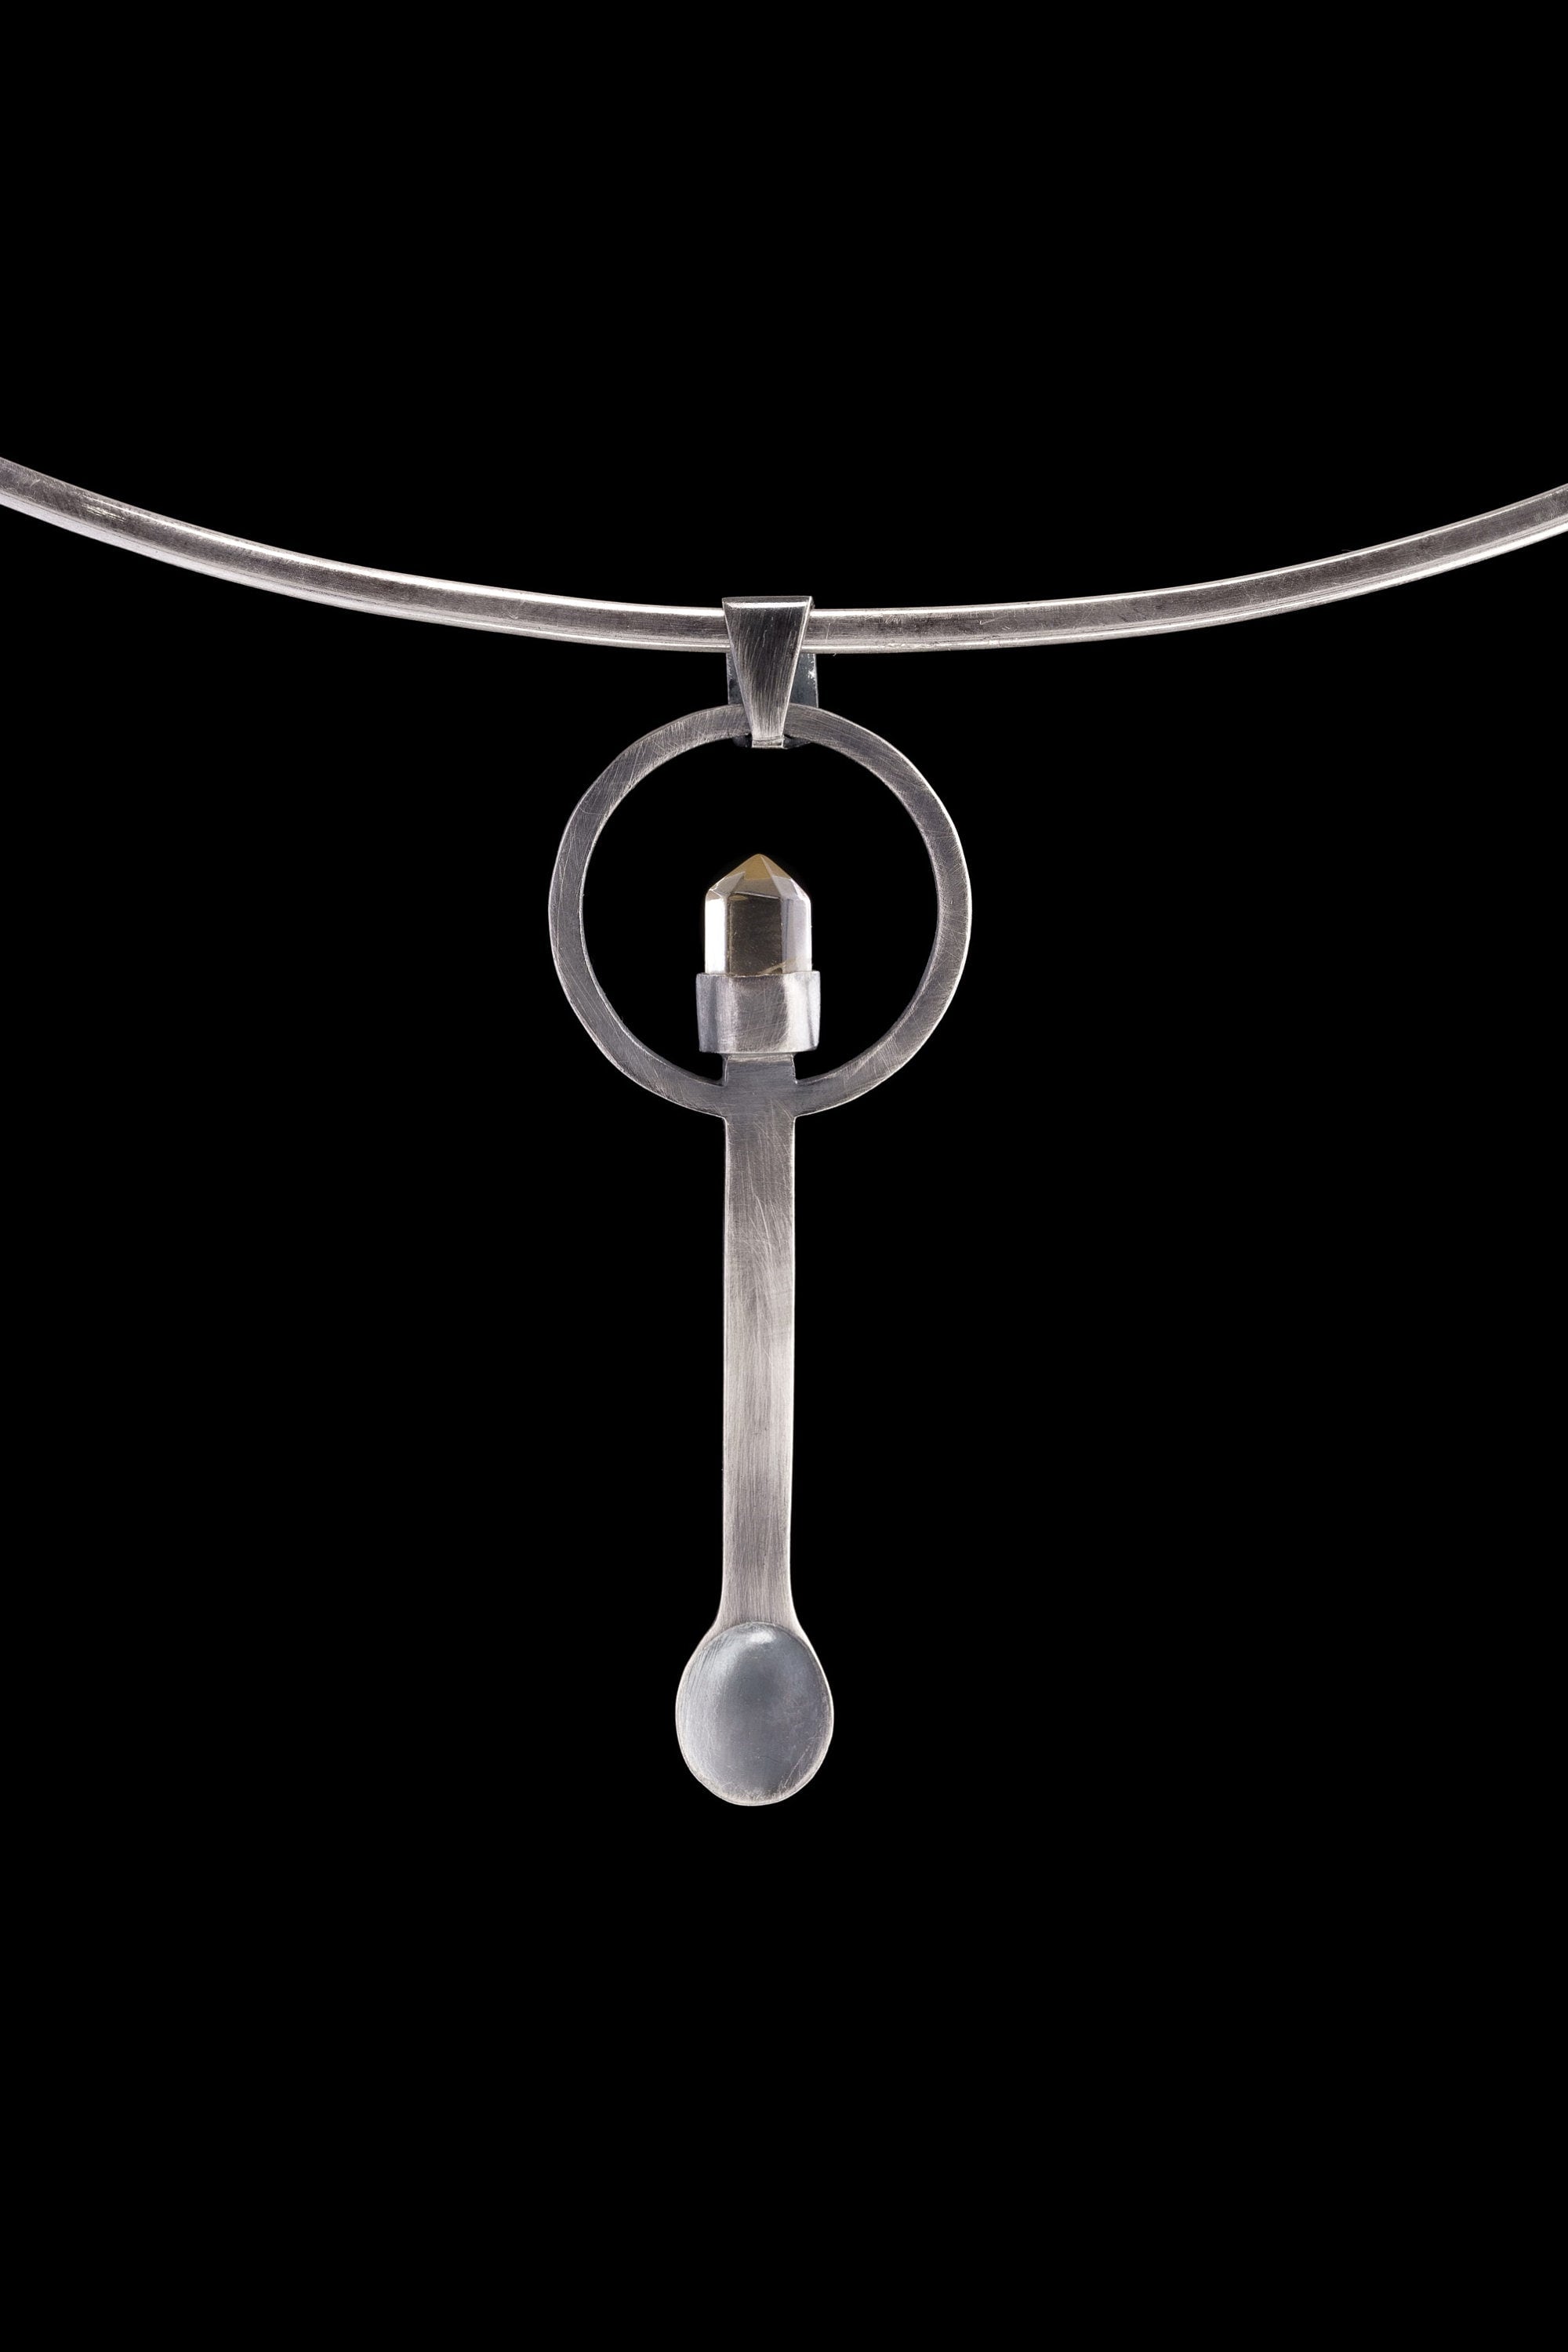 Cut Clear Quartz Generator - Spice / Ceremonial Spoon - 925 Cast Silver - Oxidised & Brush Textured - Crystal Pendant Necklace